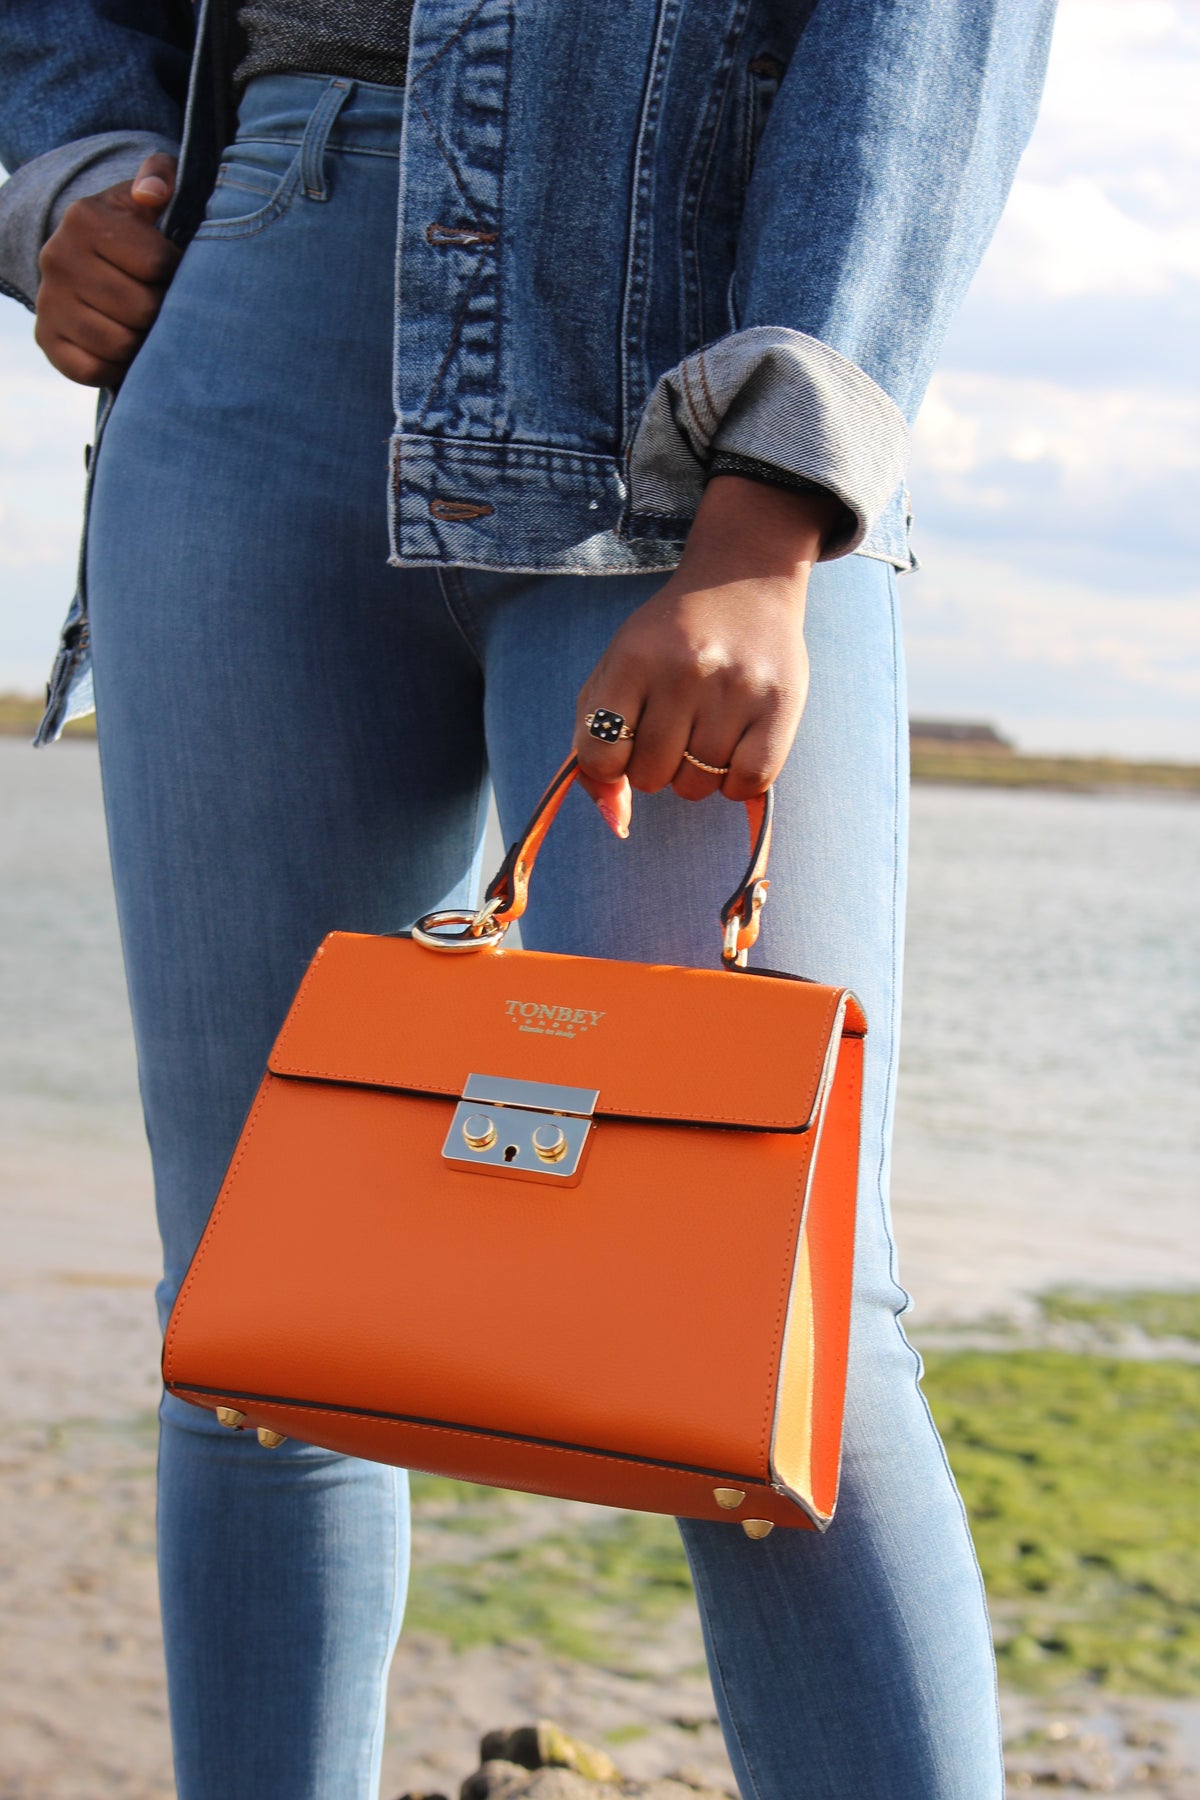 Lady in jean holding orange Kelly Bovine Leather bag